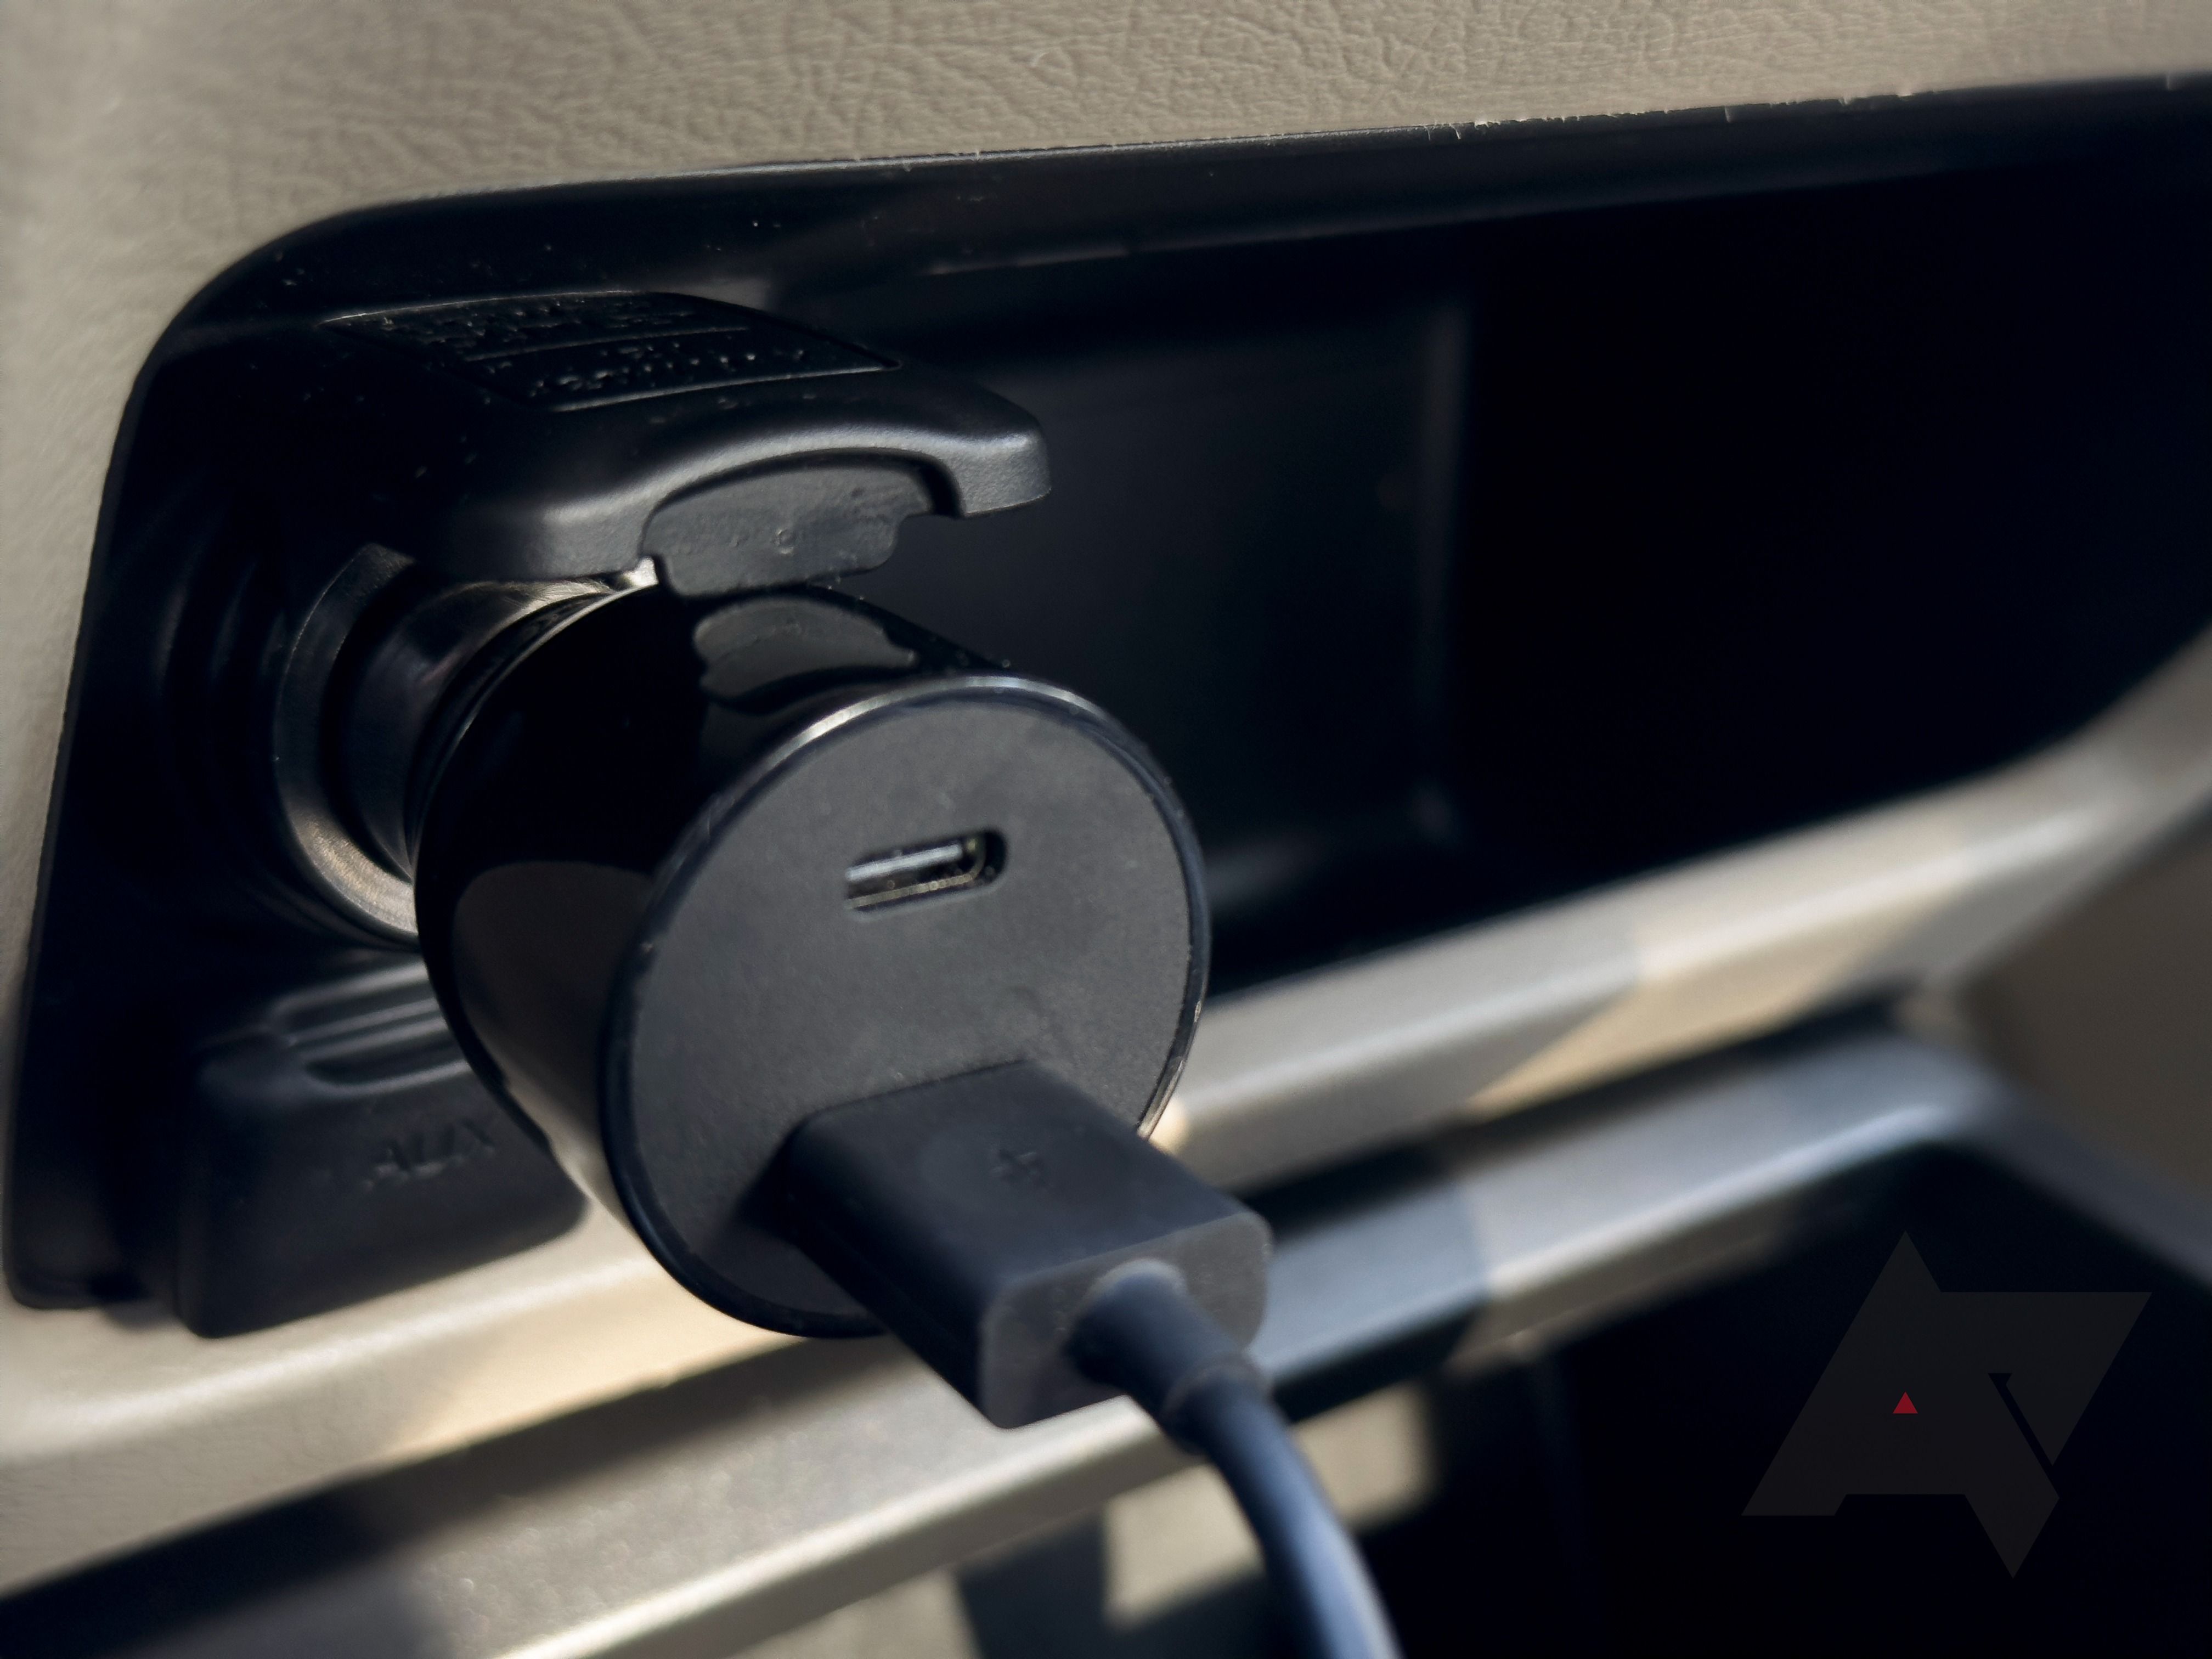 Echo Auto (2nd Gen, 2022 release) | Add Alexa to your car